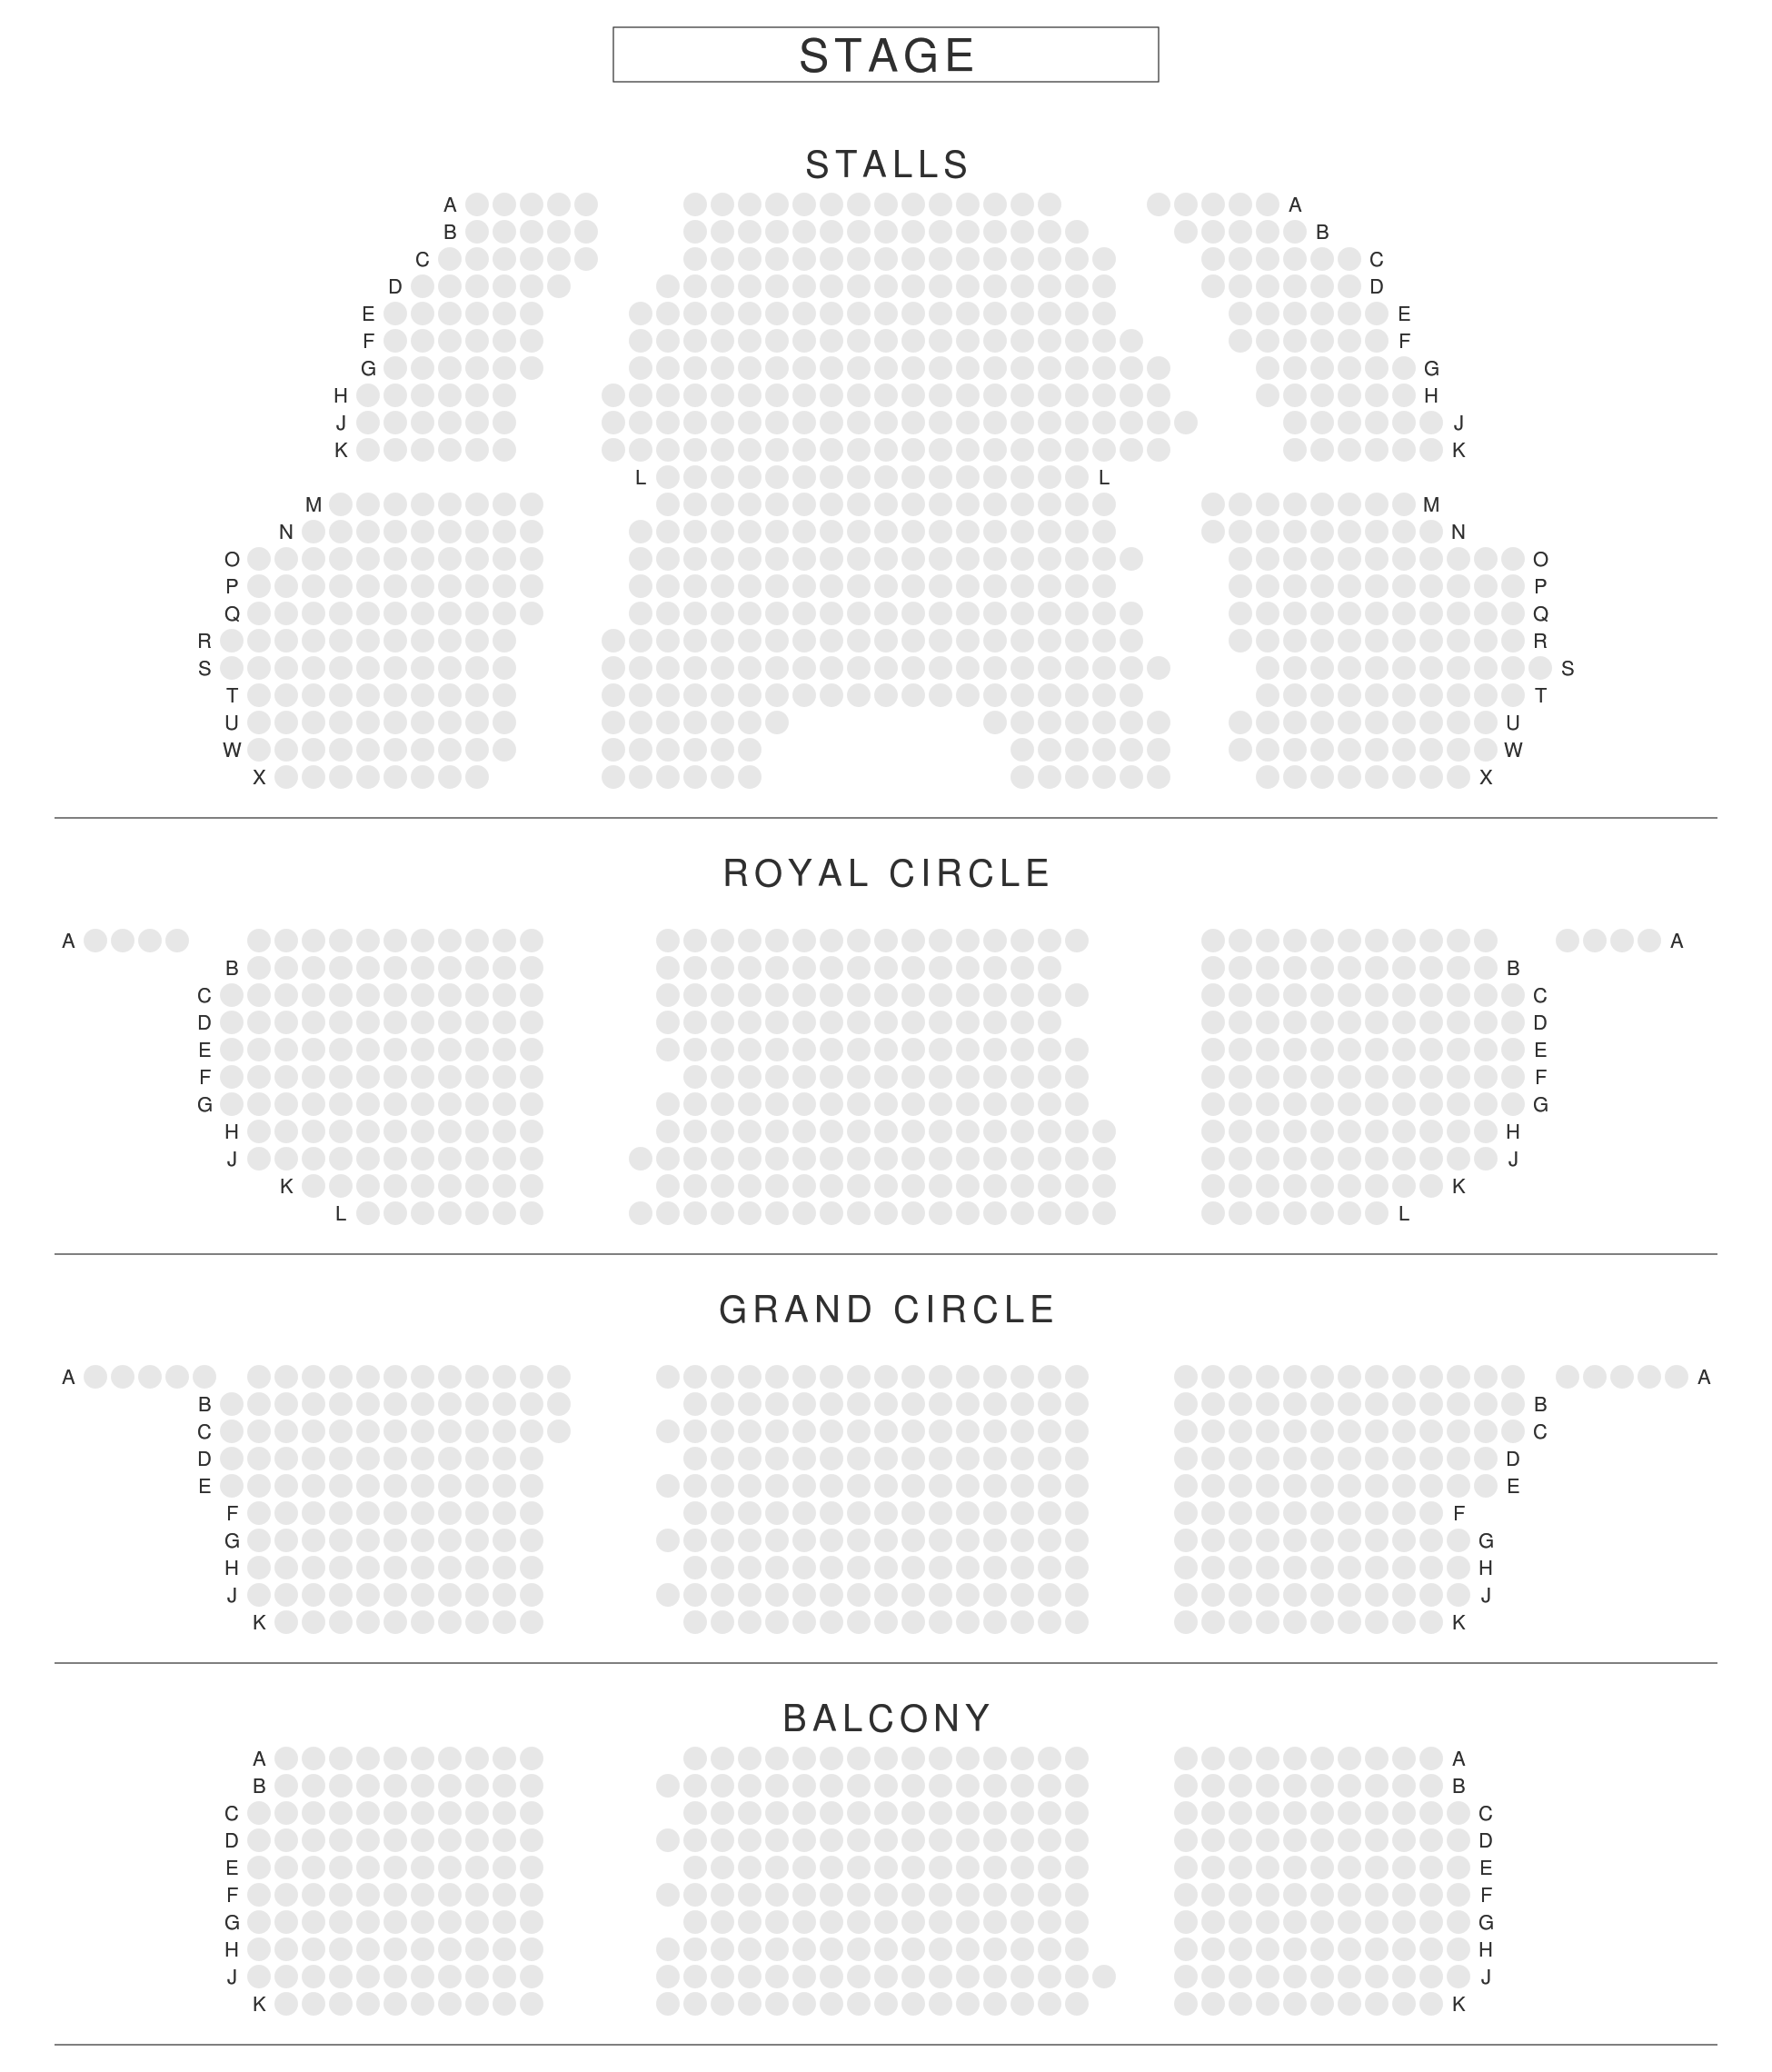 theatre-royal-drury-lane-venue-seating-plan-london.png